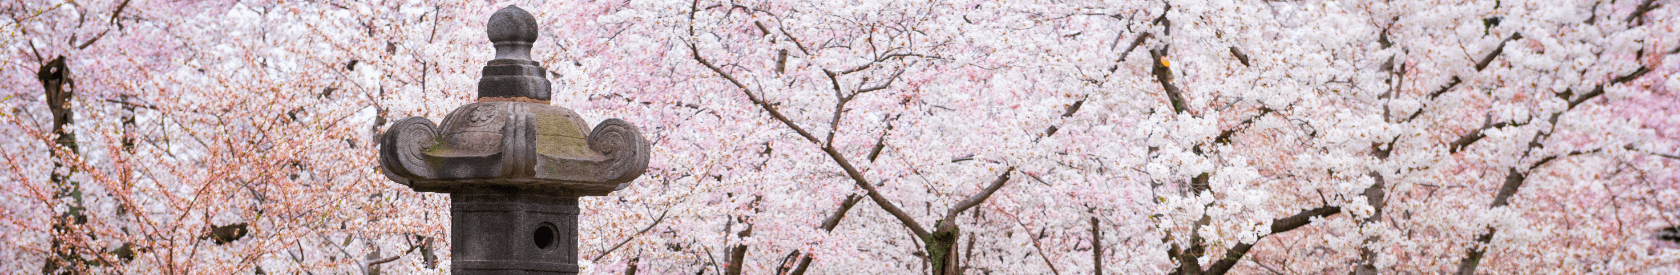 Mrs. Taft Plants a Tree: How the Cherry Blossoms Came to Washington